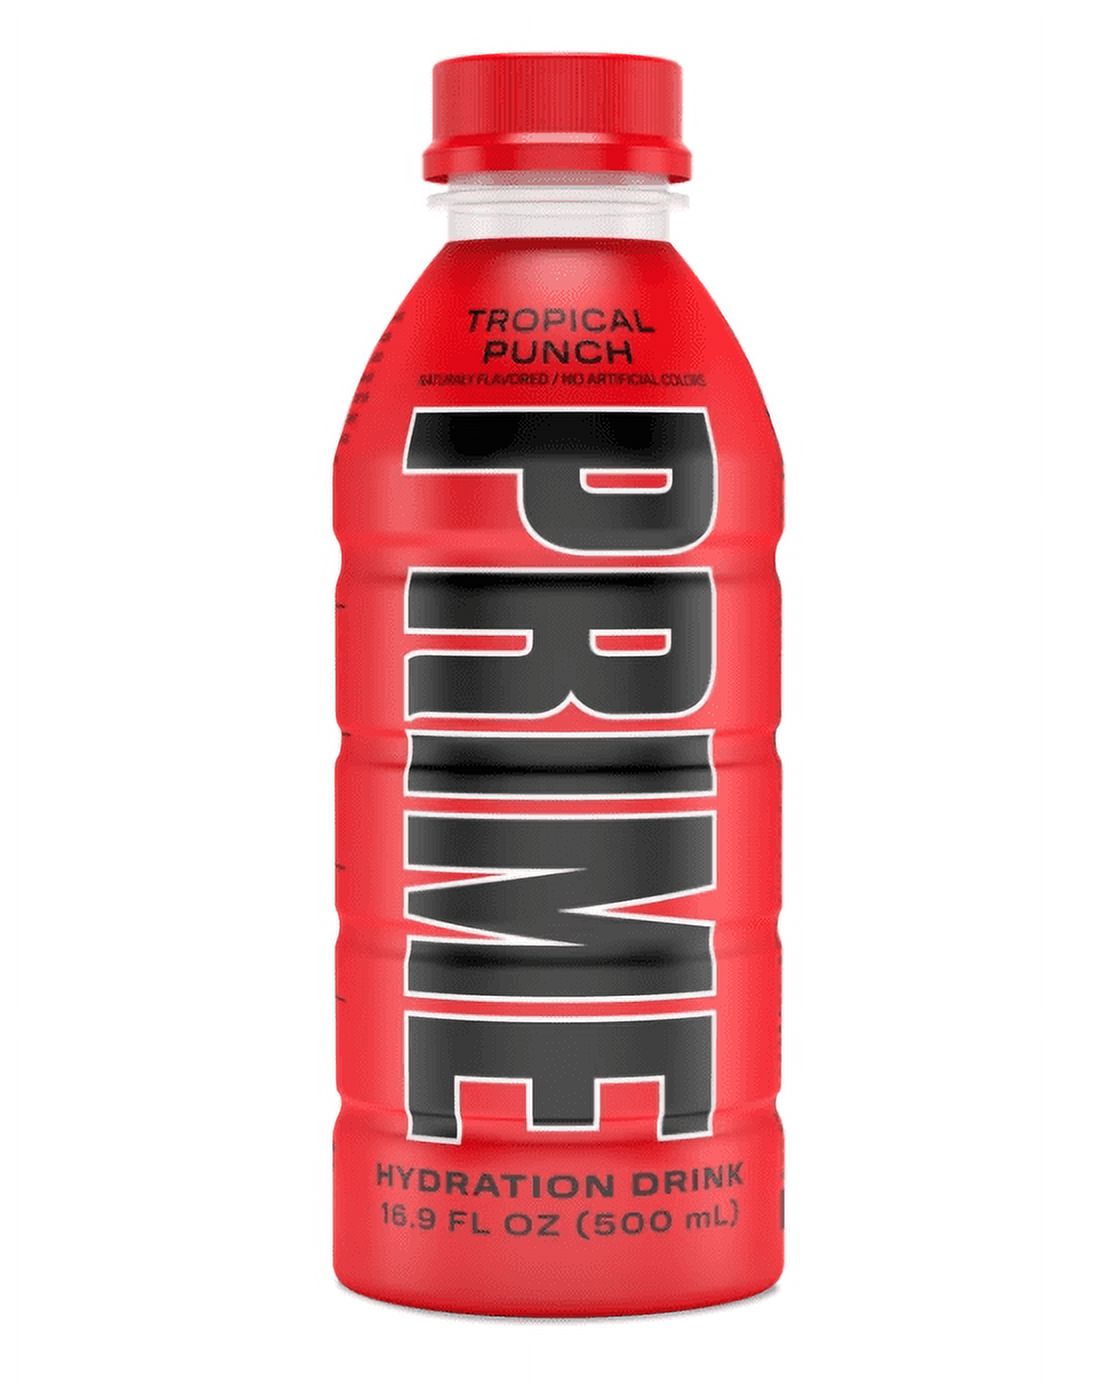 Prime Hydration Drink, Tropical Punch, 16.9 fl oz, Single Bottle - image 1 of 3